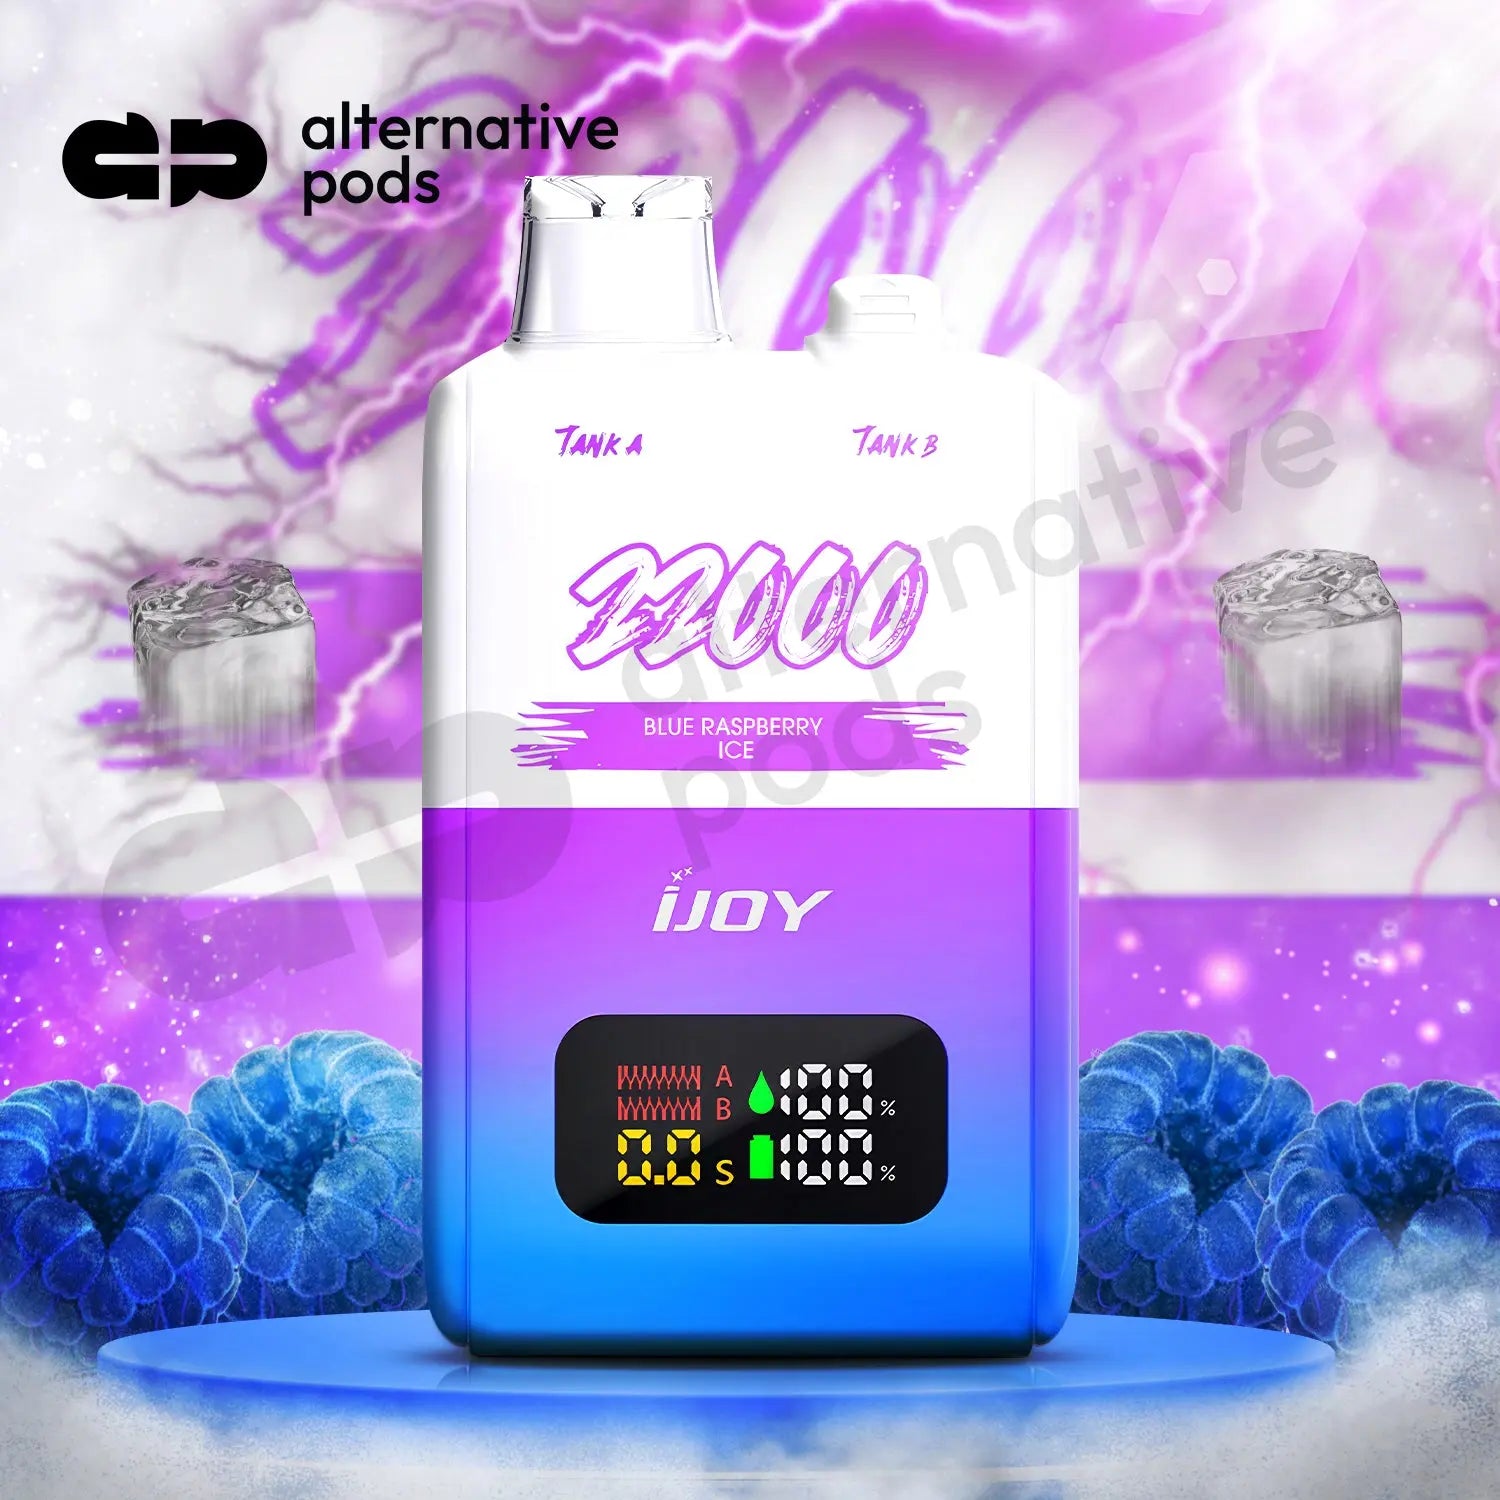 iJoy SD22000 Disposable - Alternative pods | Online Vape & Smoke Shop